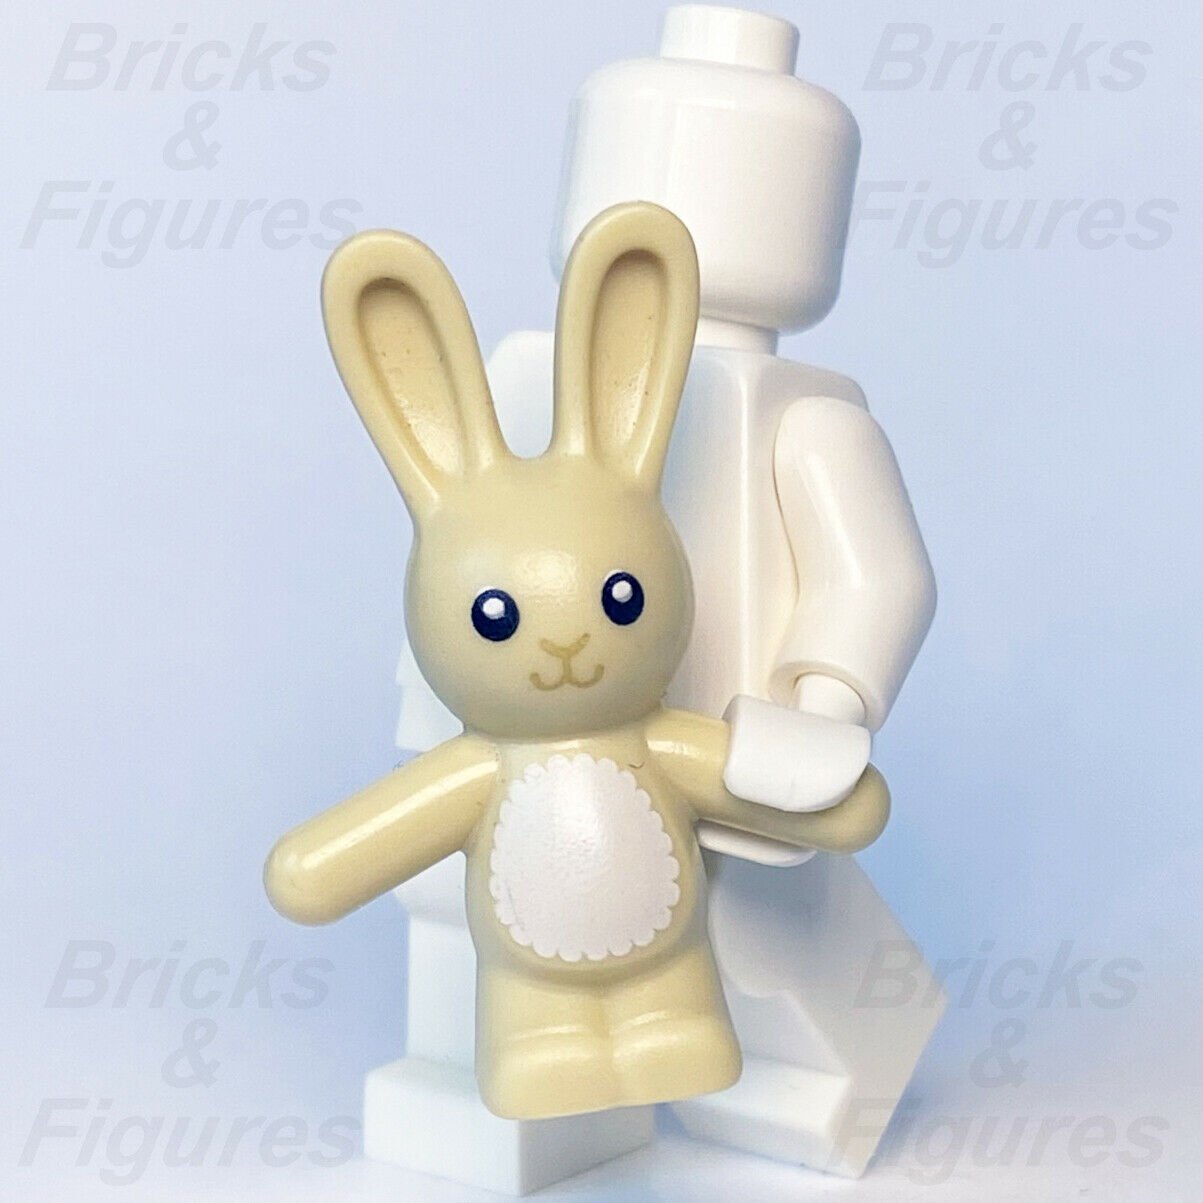 New Ideas LEGO Bunny Rabbit Teddy Animal Collectible Minifigure Part 21324 - Bricks & Figures